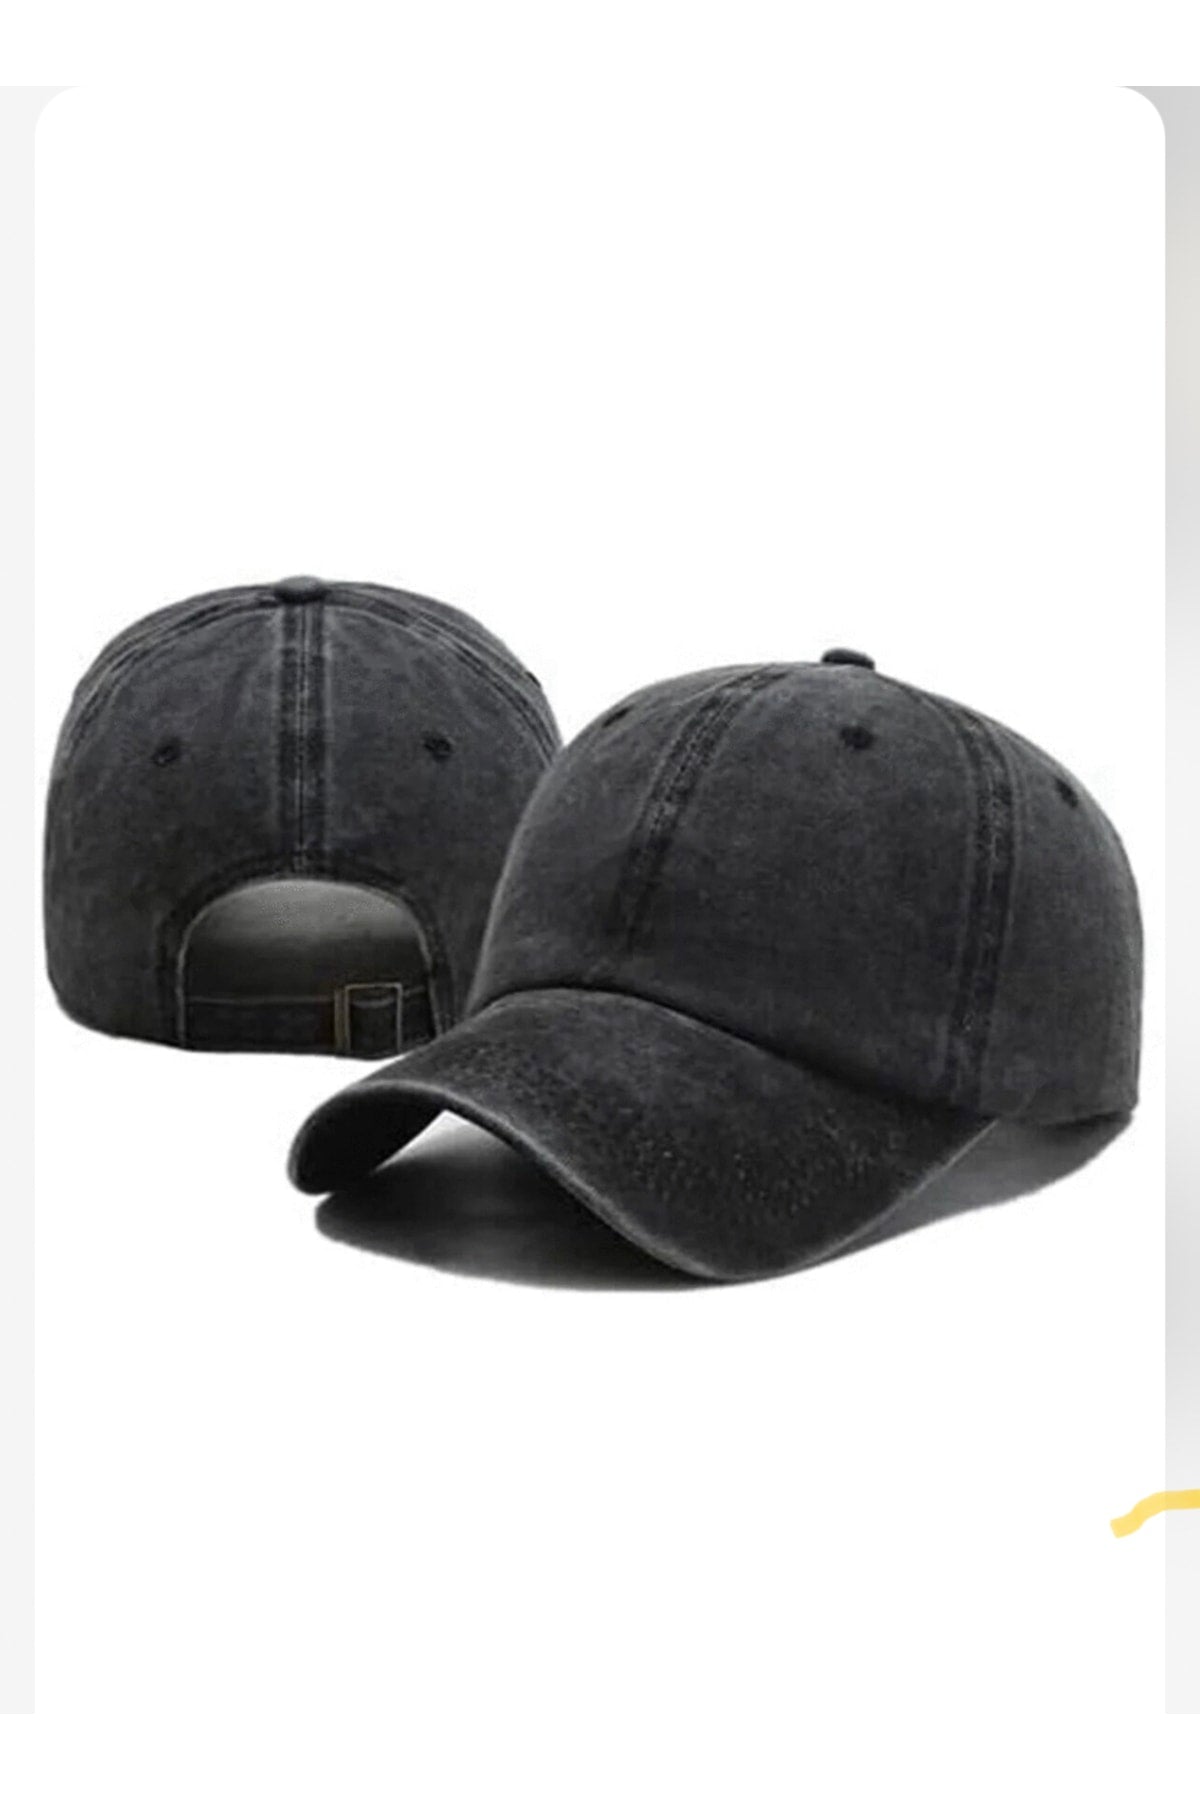 Solid Color Cap 2020 New Trend Unisex Hat